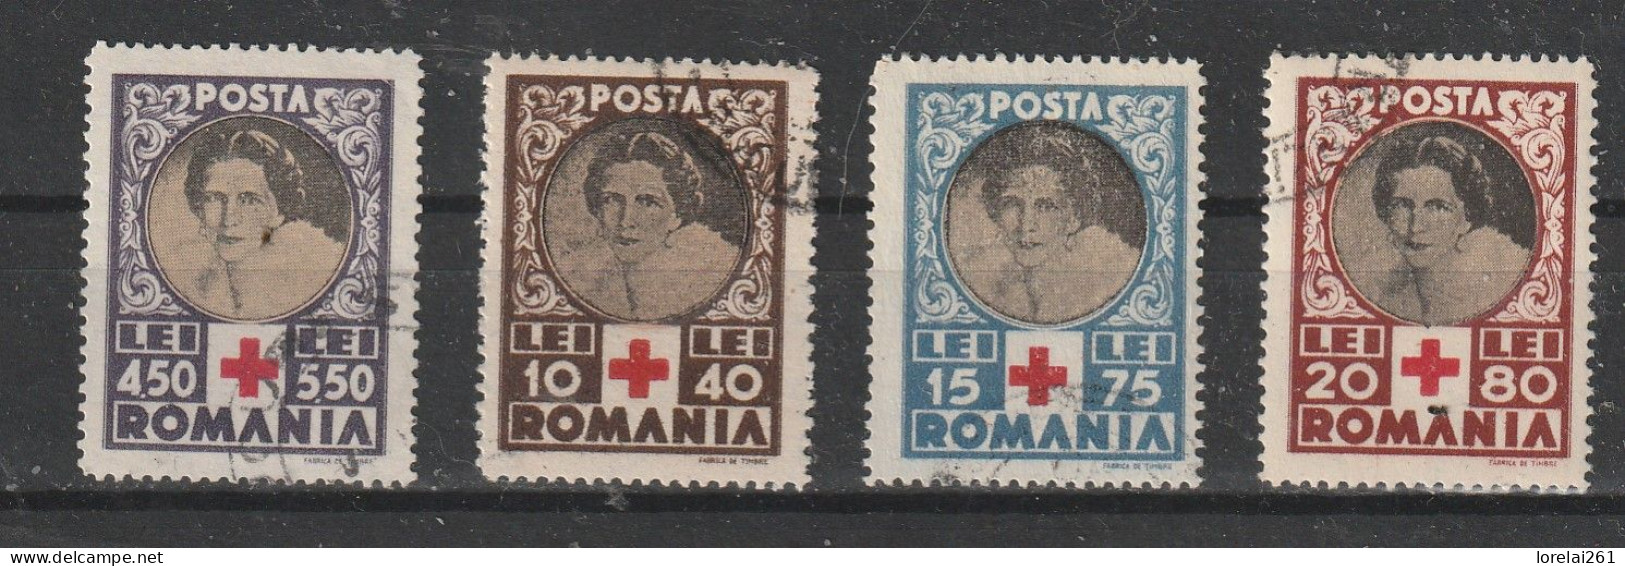 1945 - Croix Rouge/Reine Elena Mi No 827/830 - Used Stamps